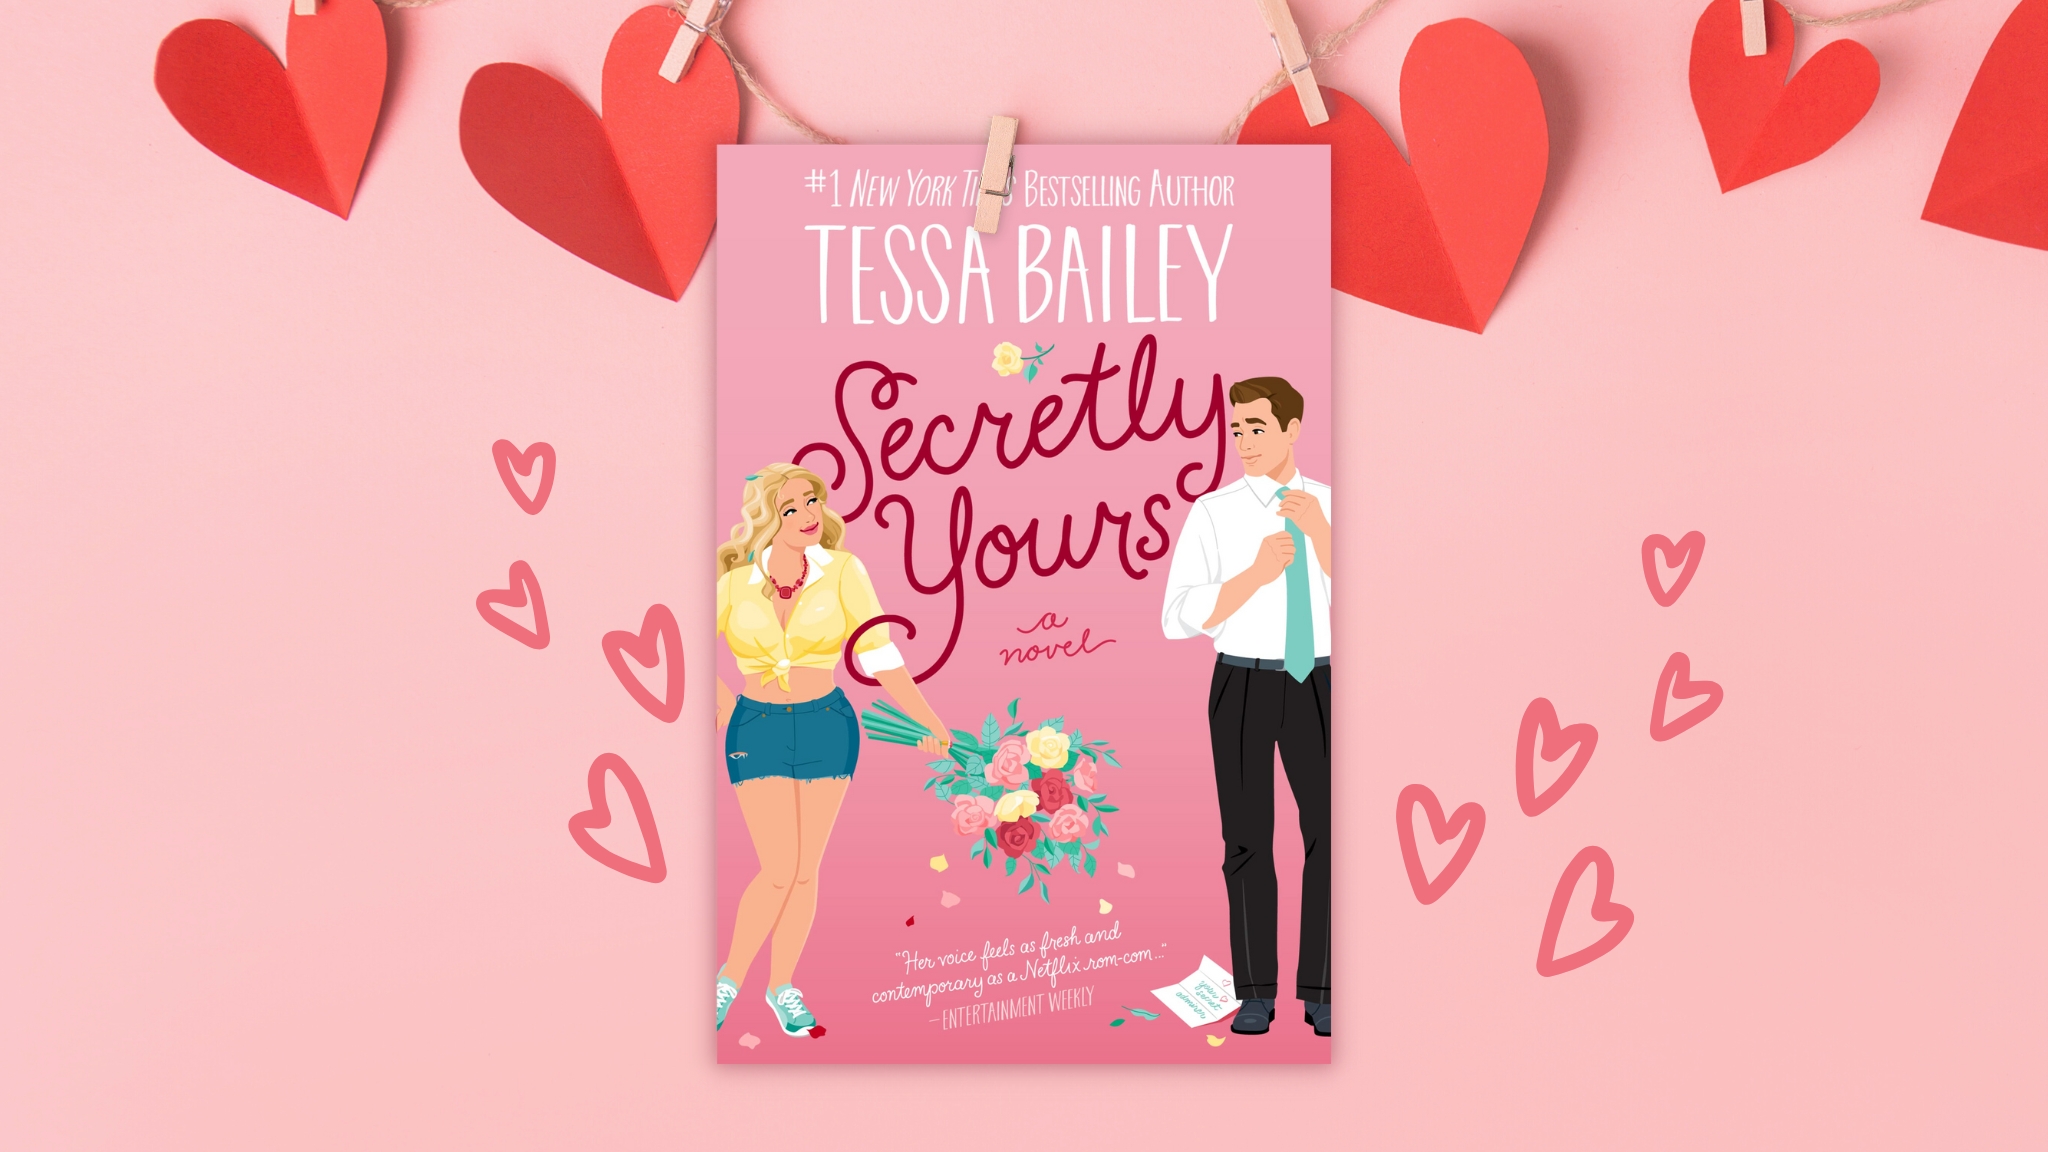 Secret Admirer Letters Help Love Bloom in New Tessa Bailey | BookTrib.